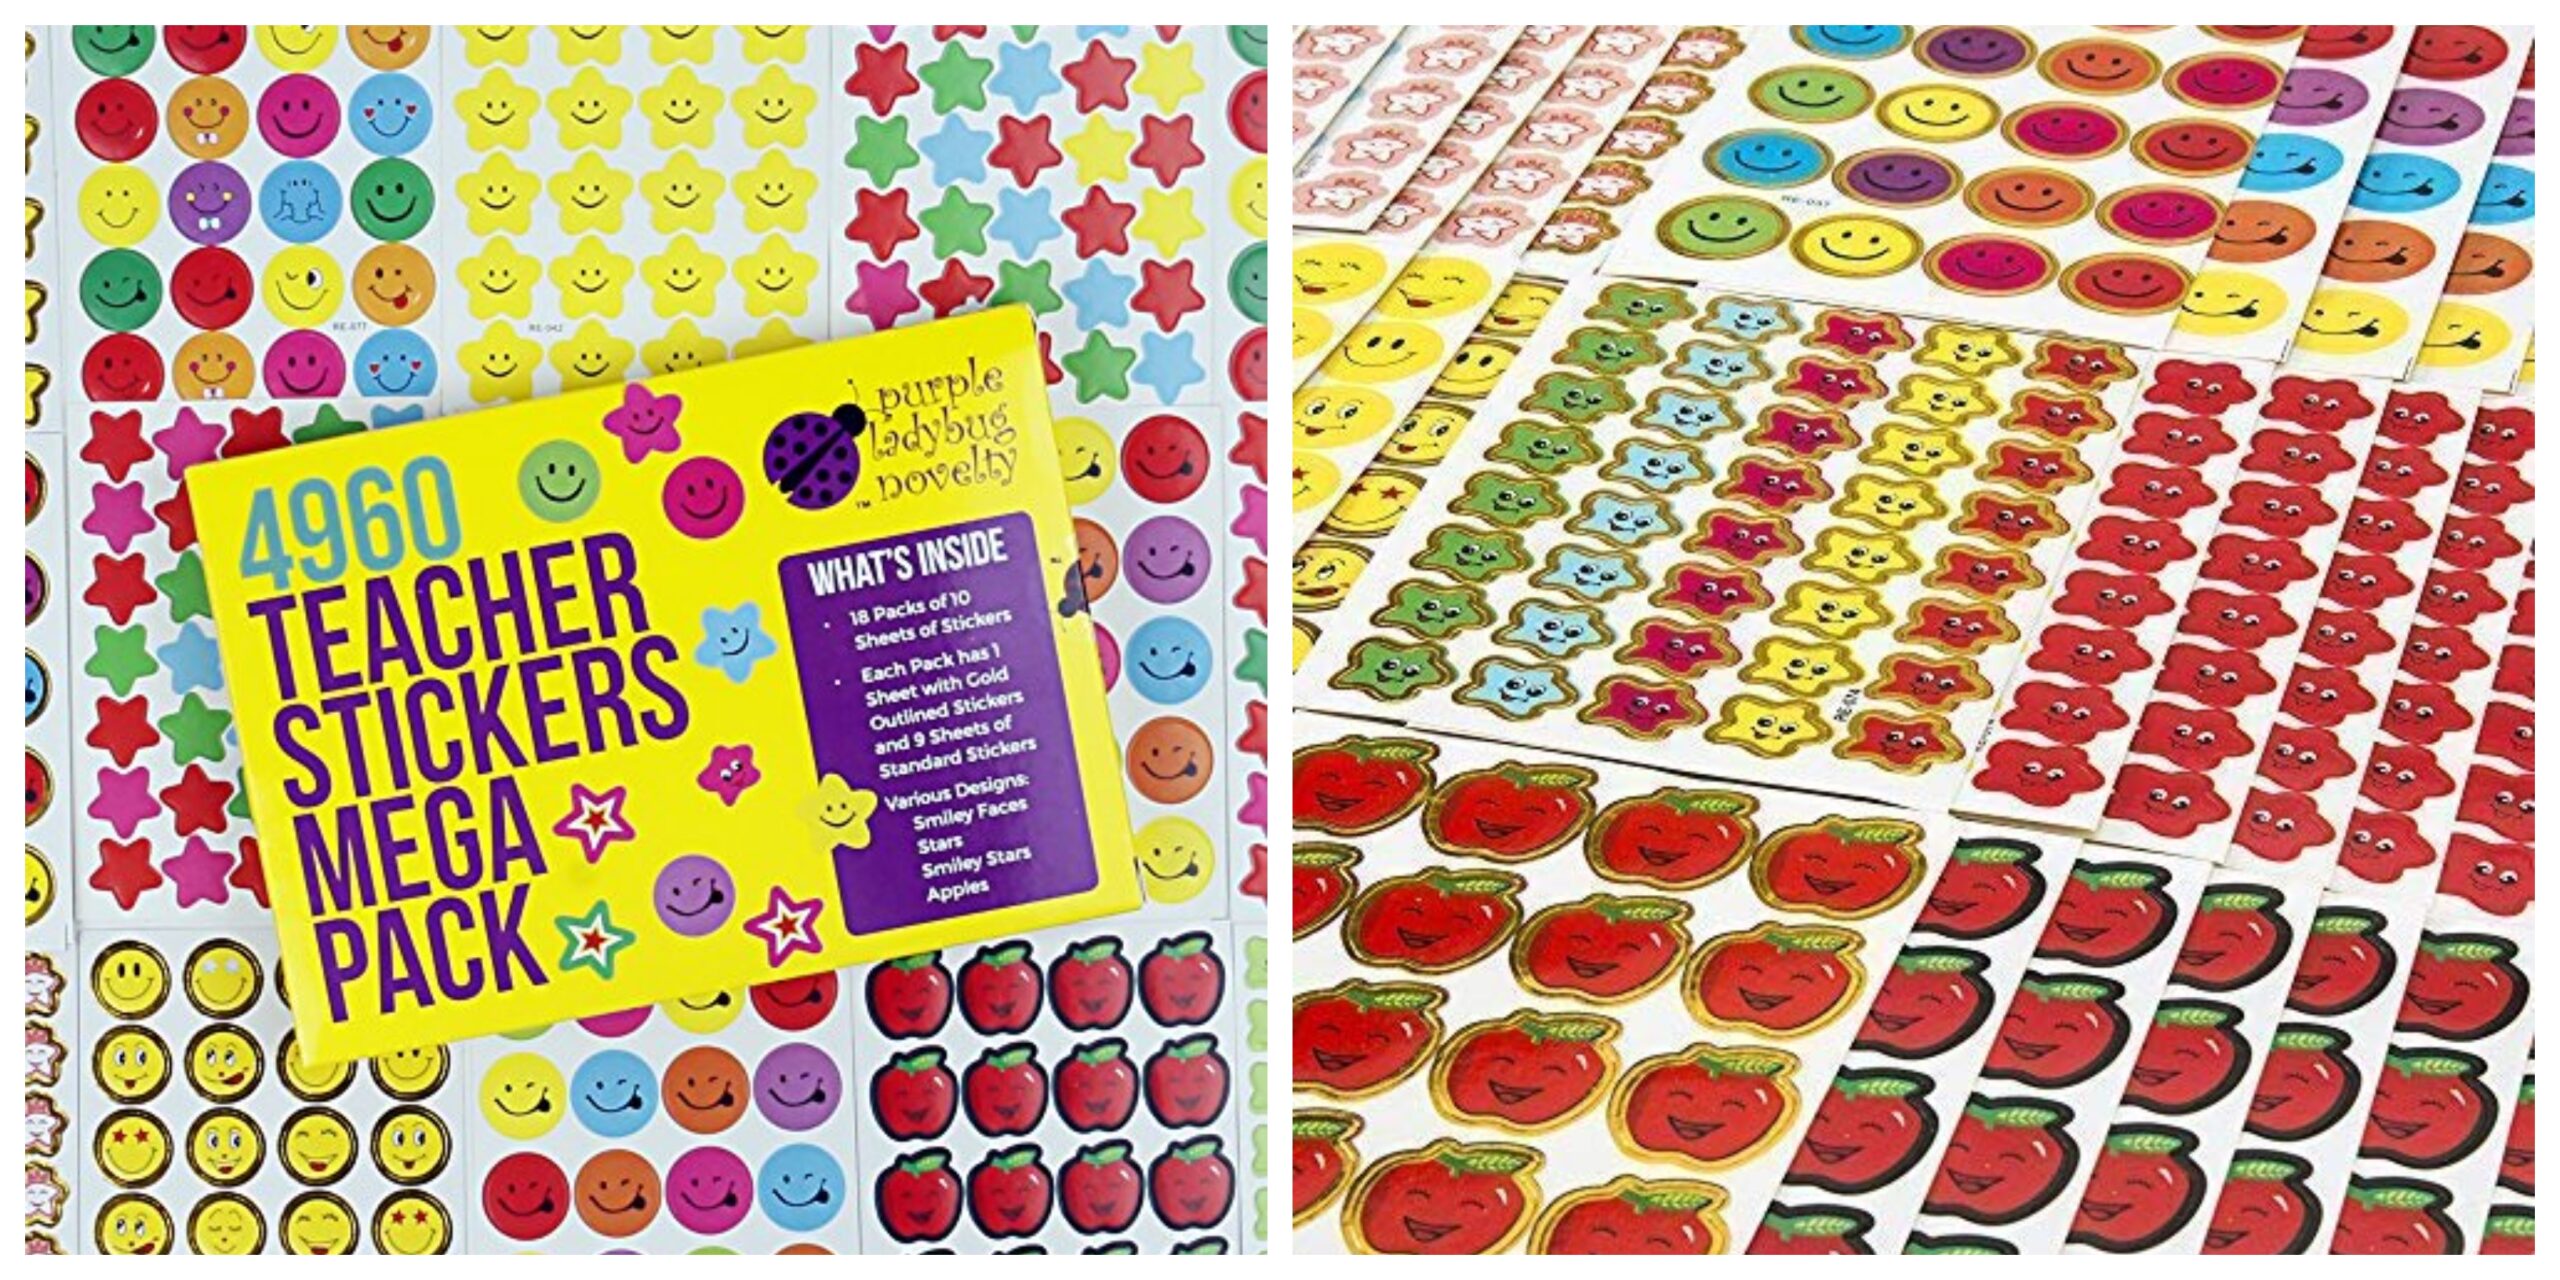 Alea's Deals 23% Off Teacher Stickers for Kids Mega Pack!! Was $14.99!  